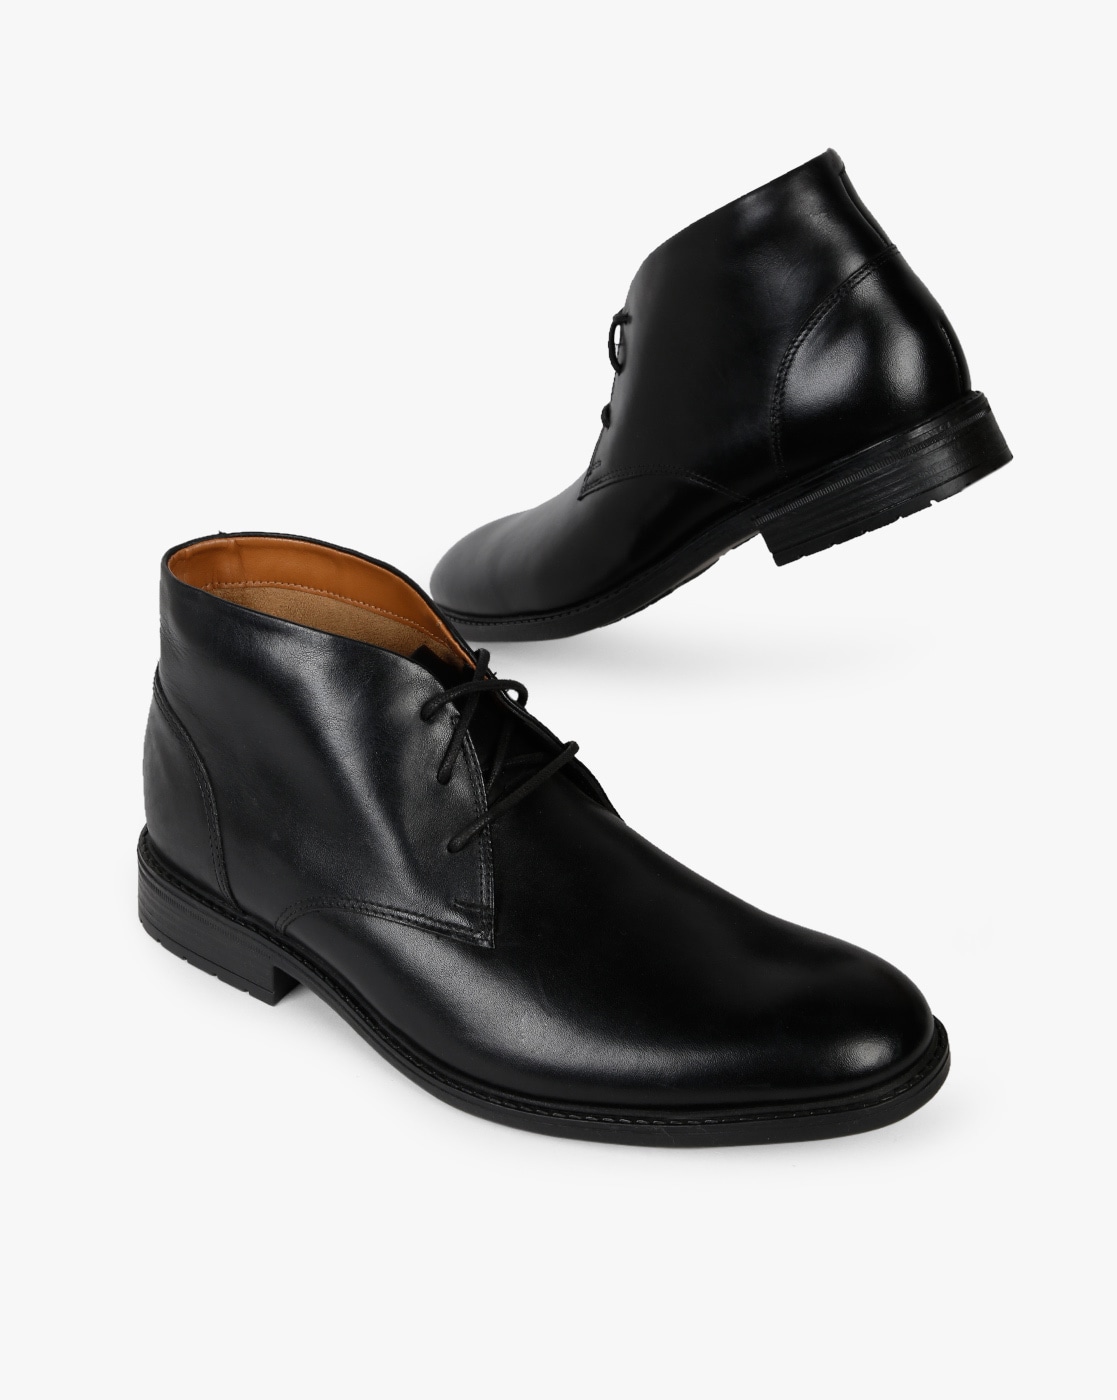 waterproof formal shoes for men